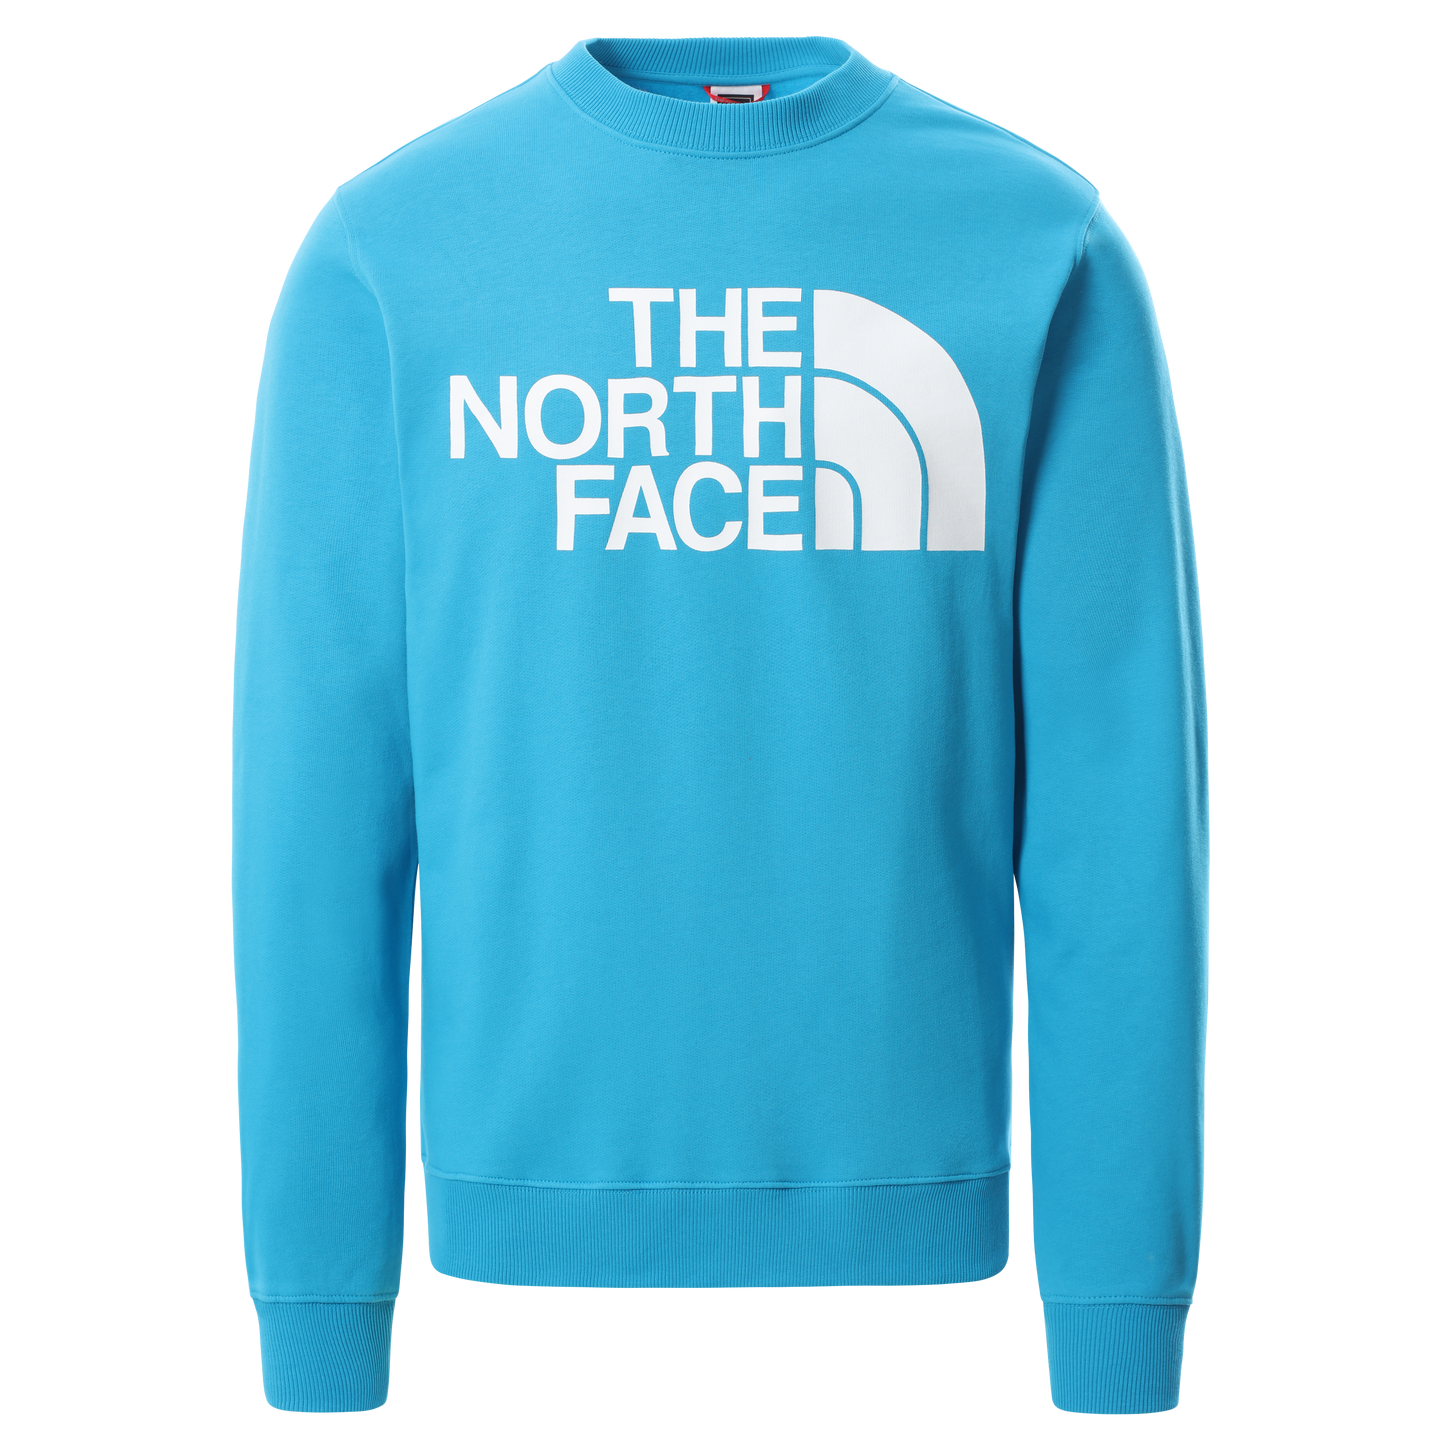 The North Face Standard Crew Sweatshirt